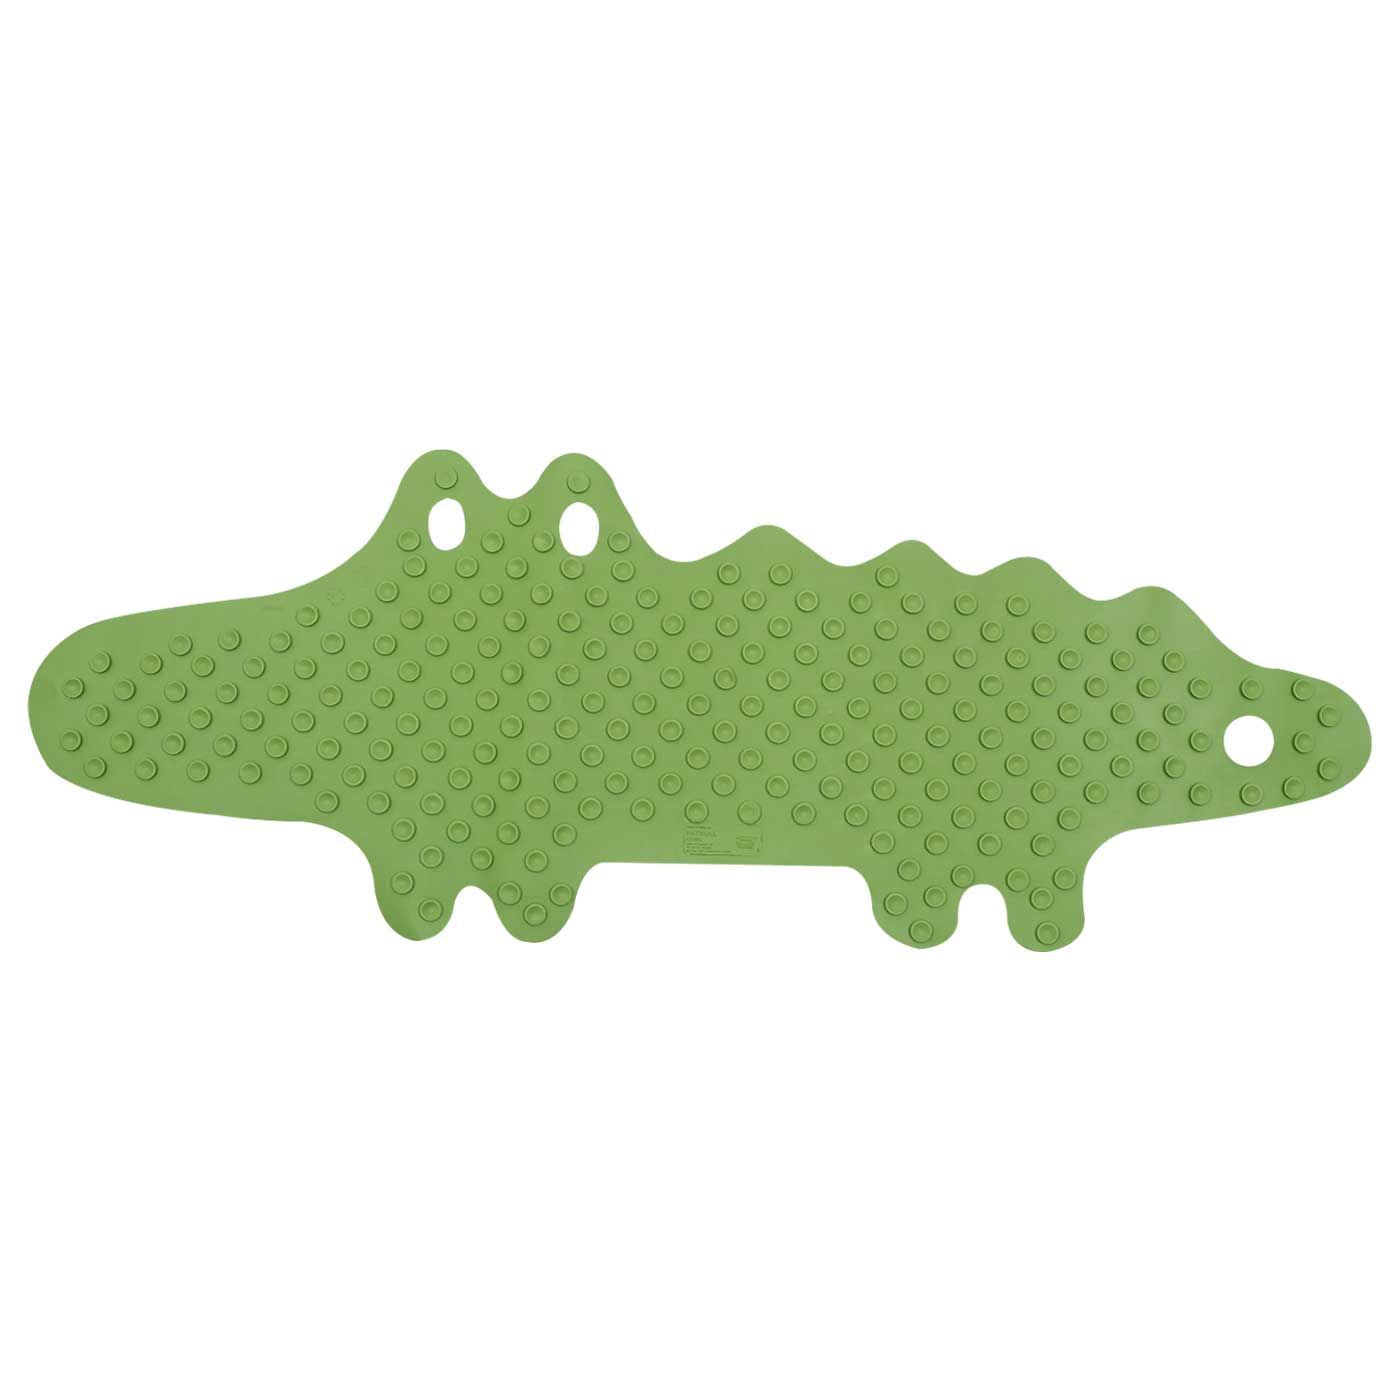 IKEA Patrull Bathtub Mat Green Crocodile - 1